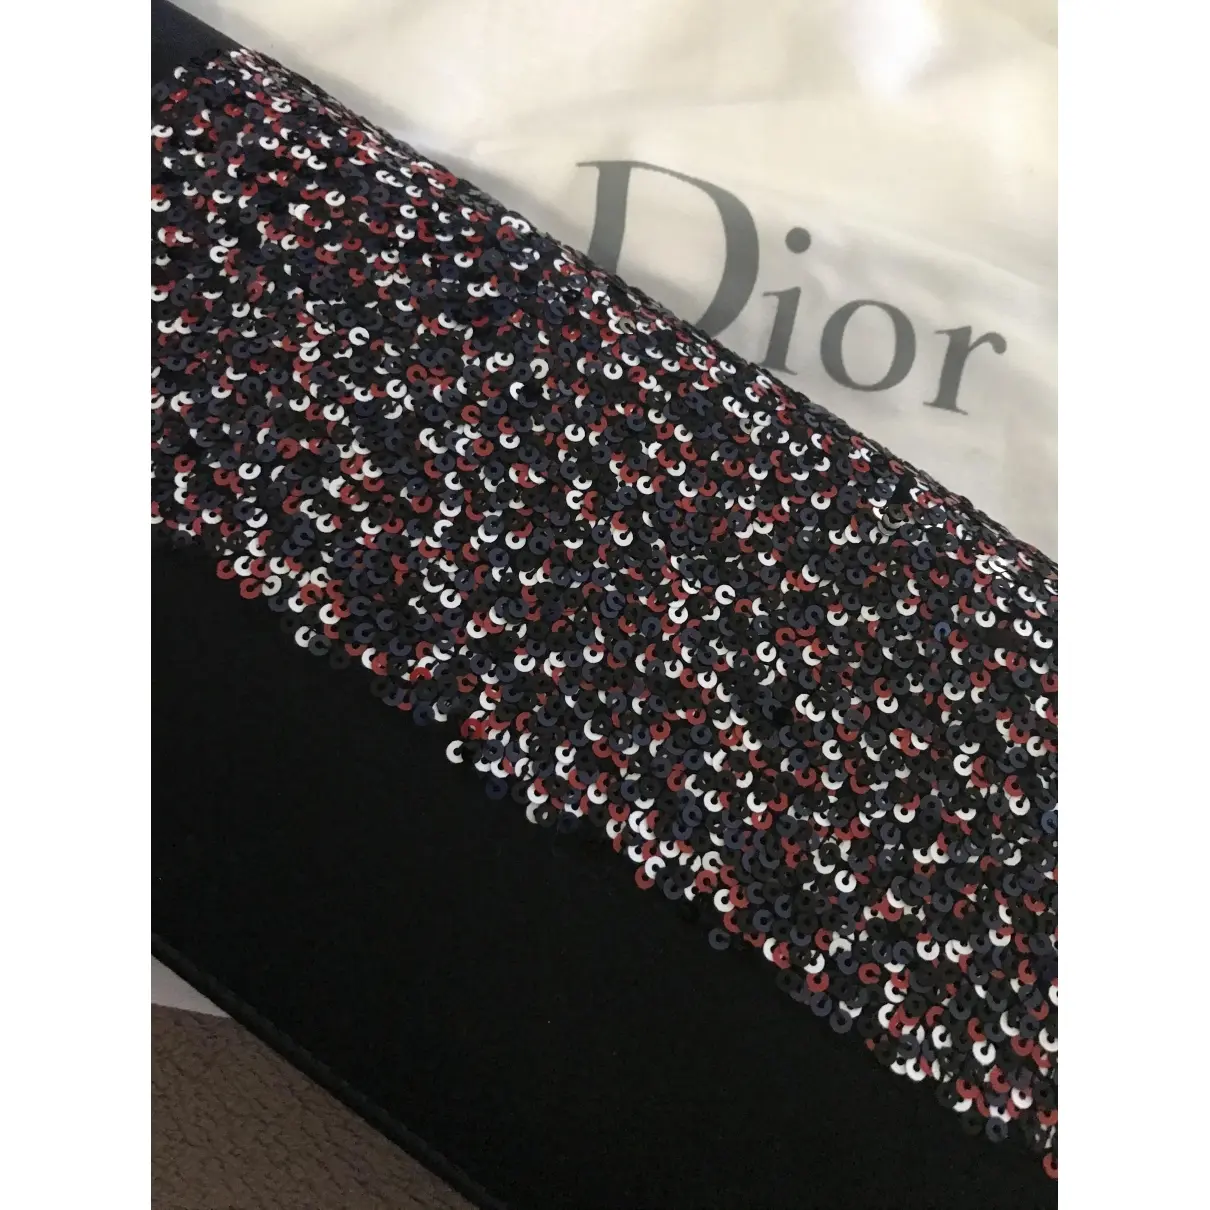 Buy Dior Glitter mini bag online